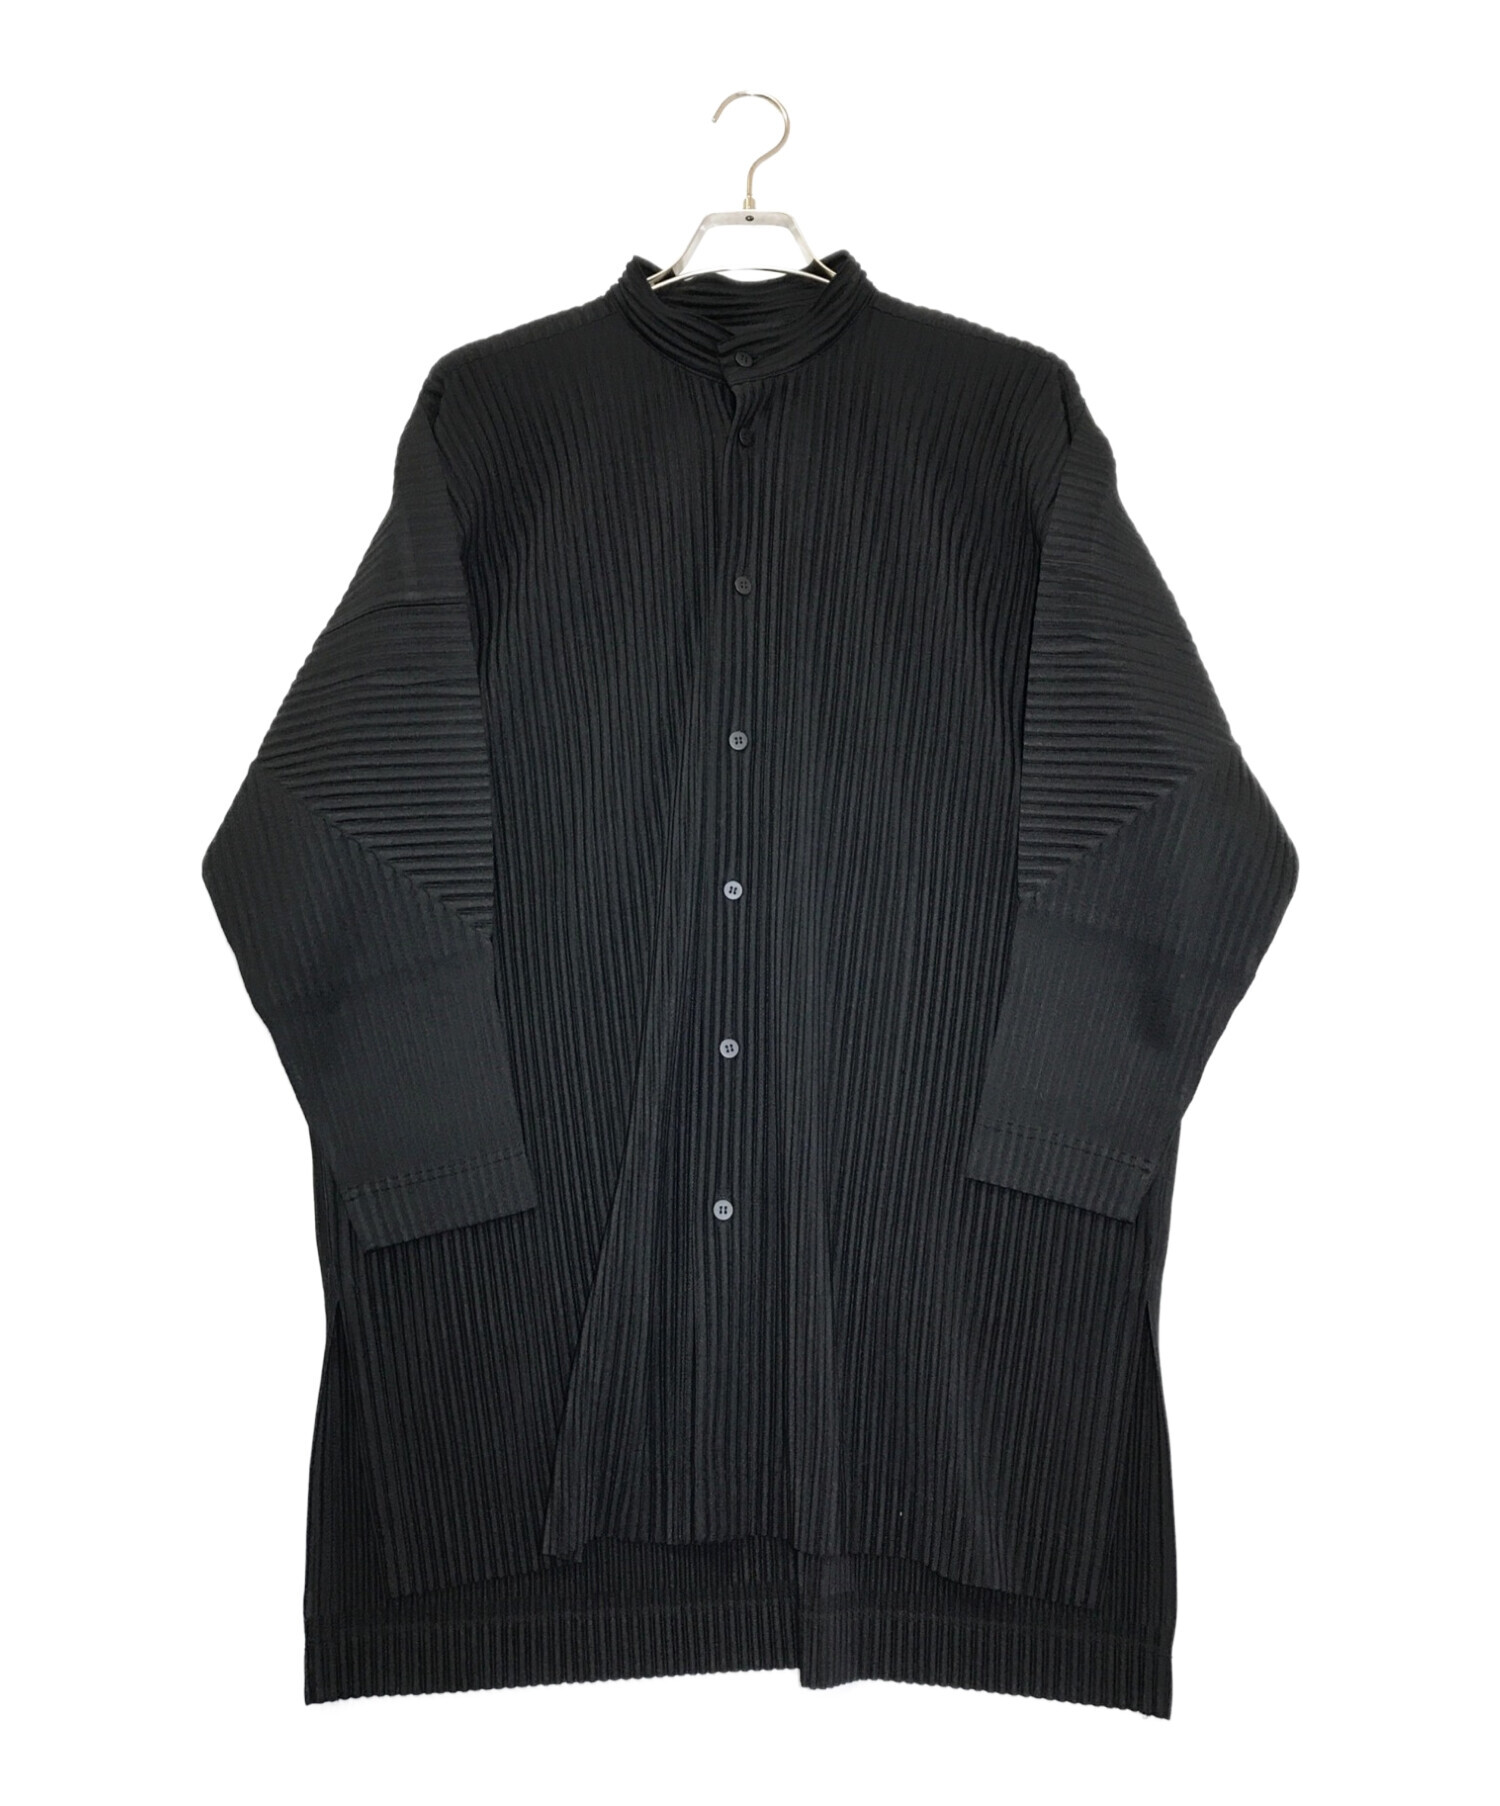 HOMME PLISSE ISSEY MIYAKE (オムプリッセ イッセイミヤケ) プリーツシャツ ブラック サイズ:2